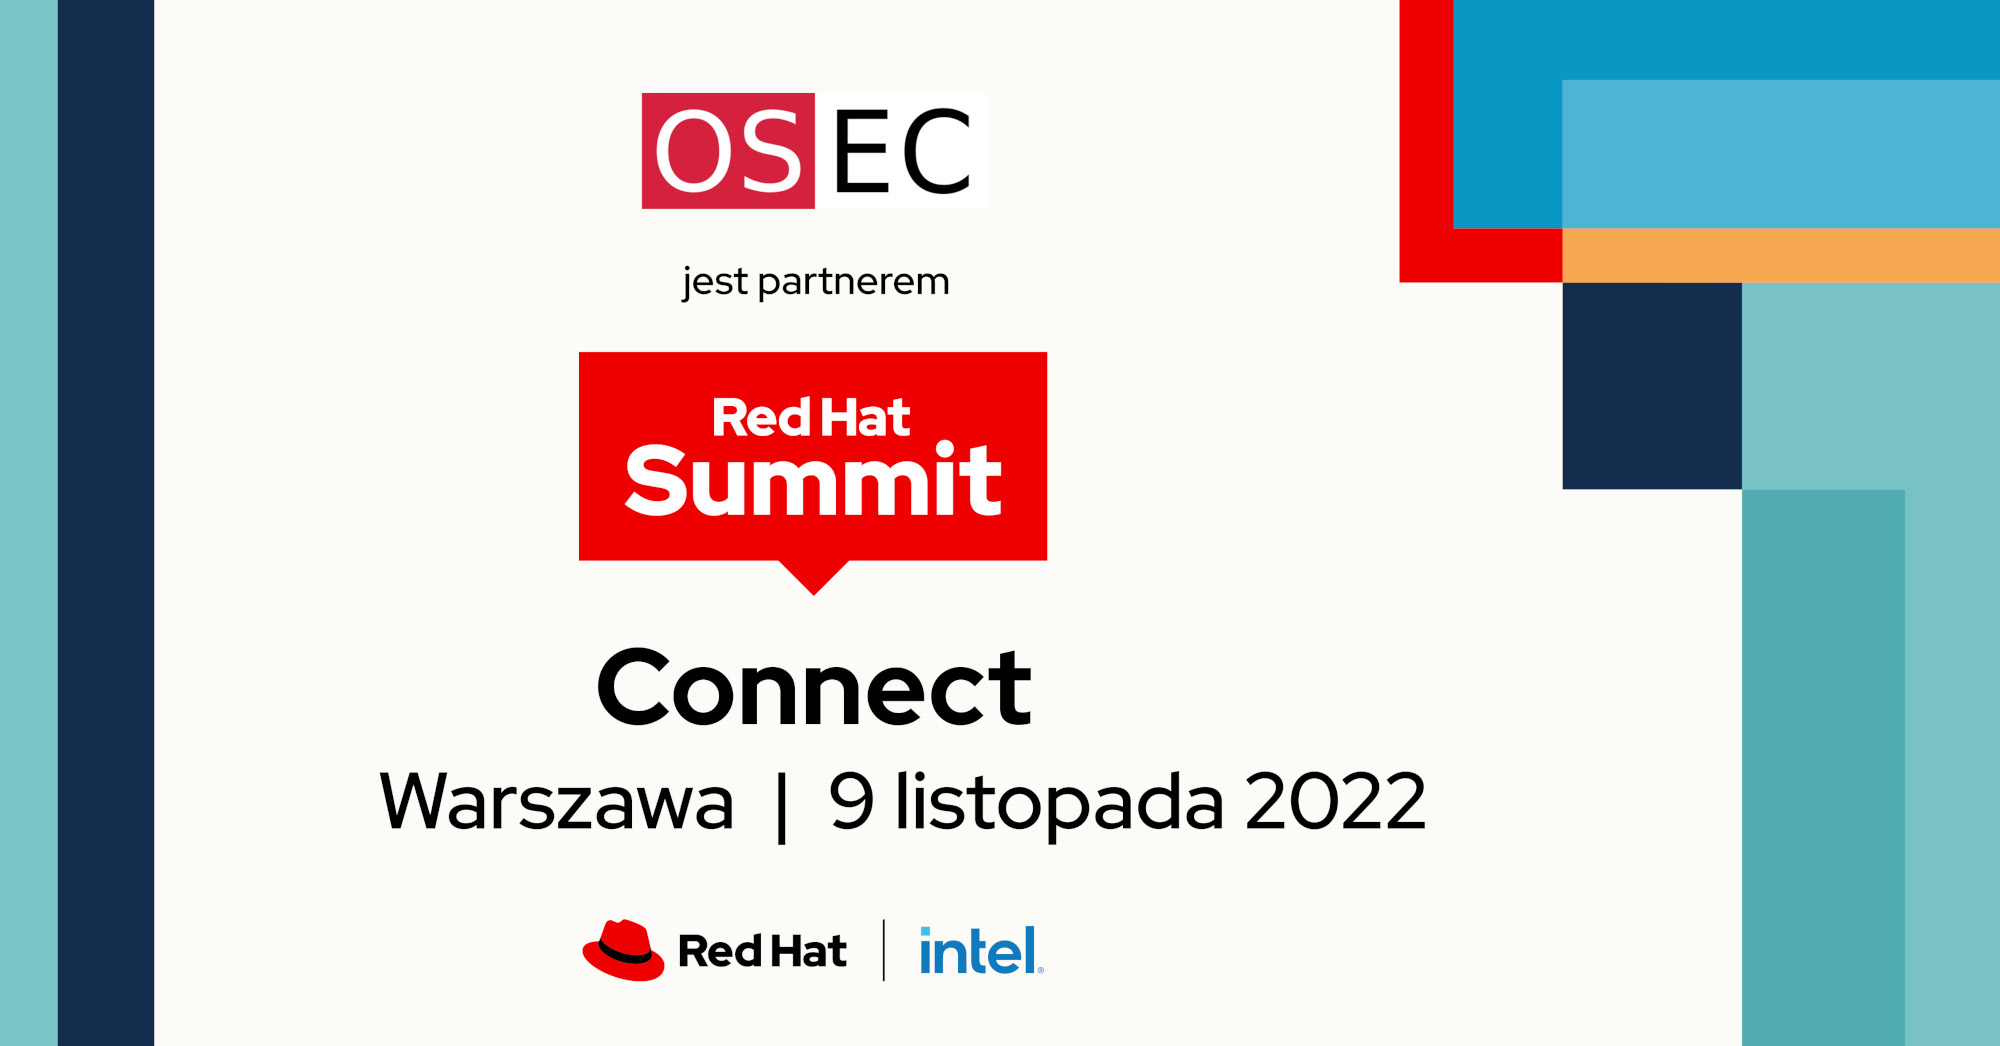 rh-intel-summit-connect-sponsor-2022-emea-osec1.jpg